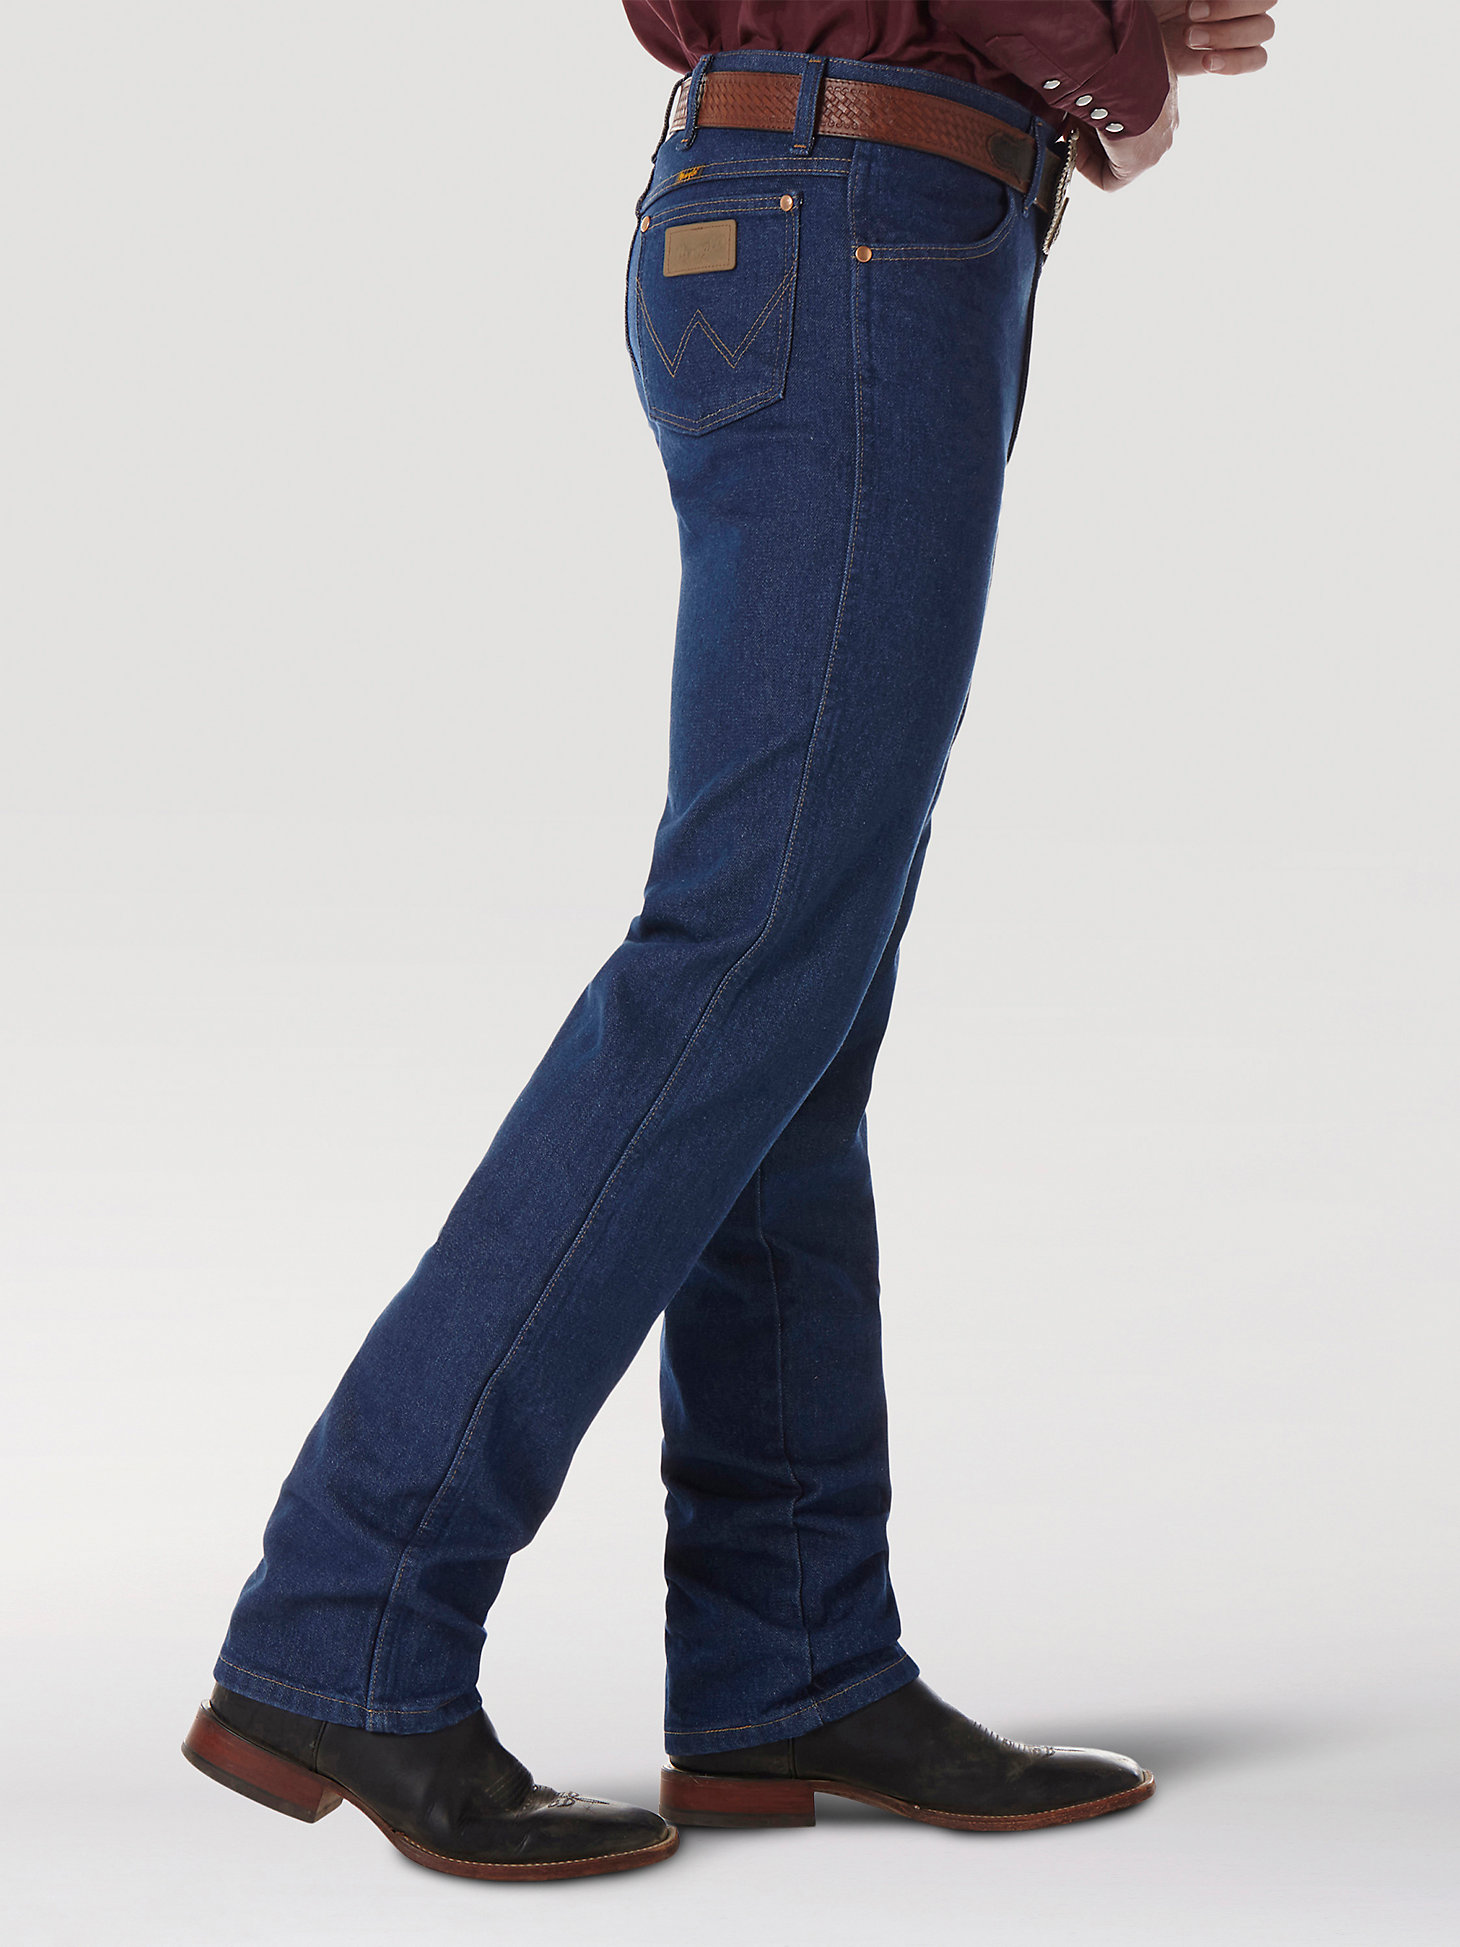 Wrangler® Cowboy Cut® Slim Fit Jean in Prewashed Indigo alternative view 4